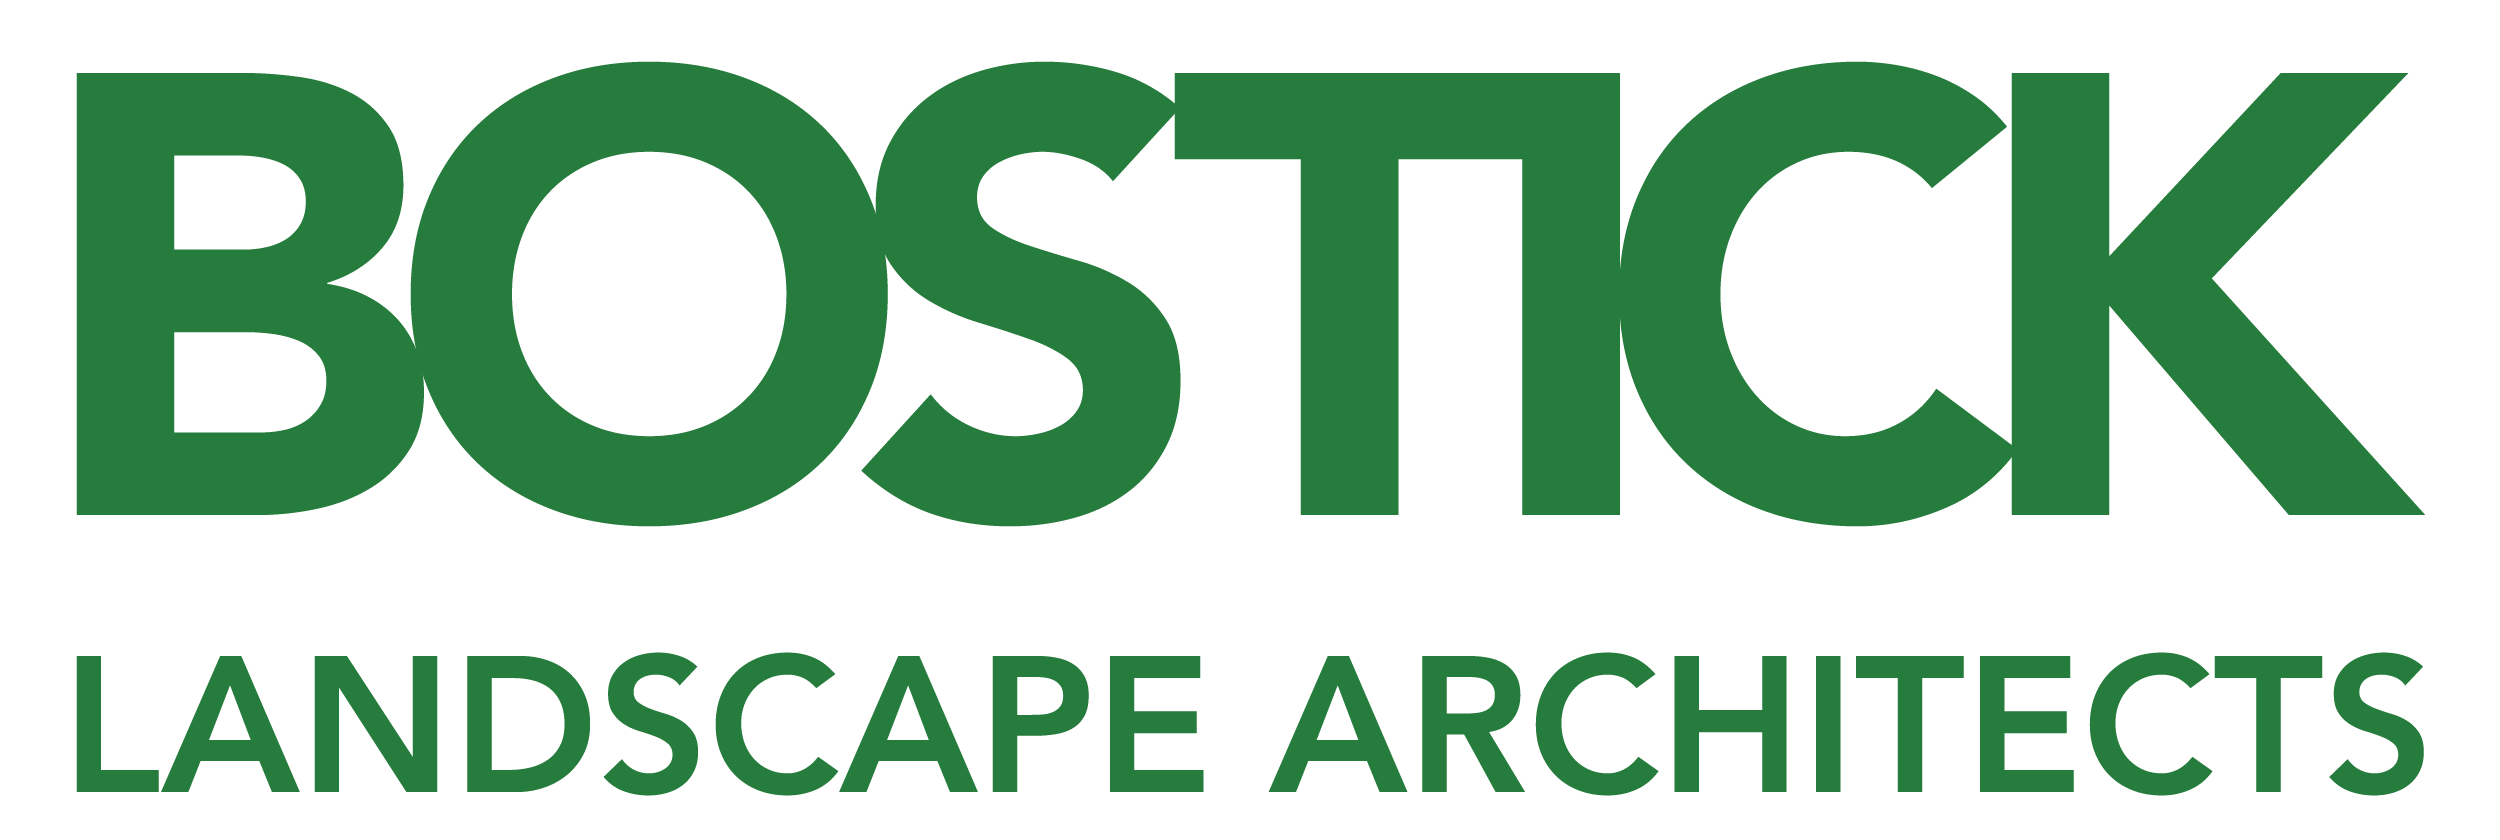 Bostick logo